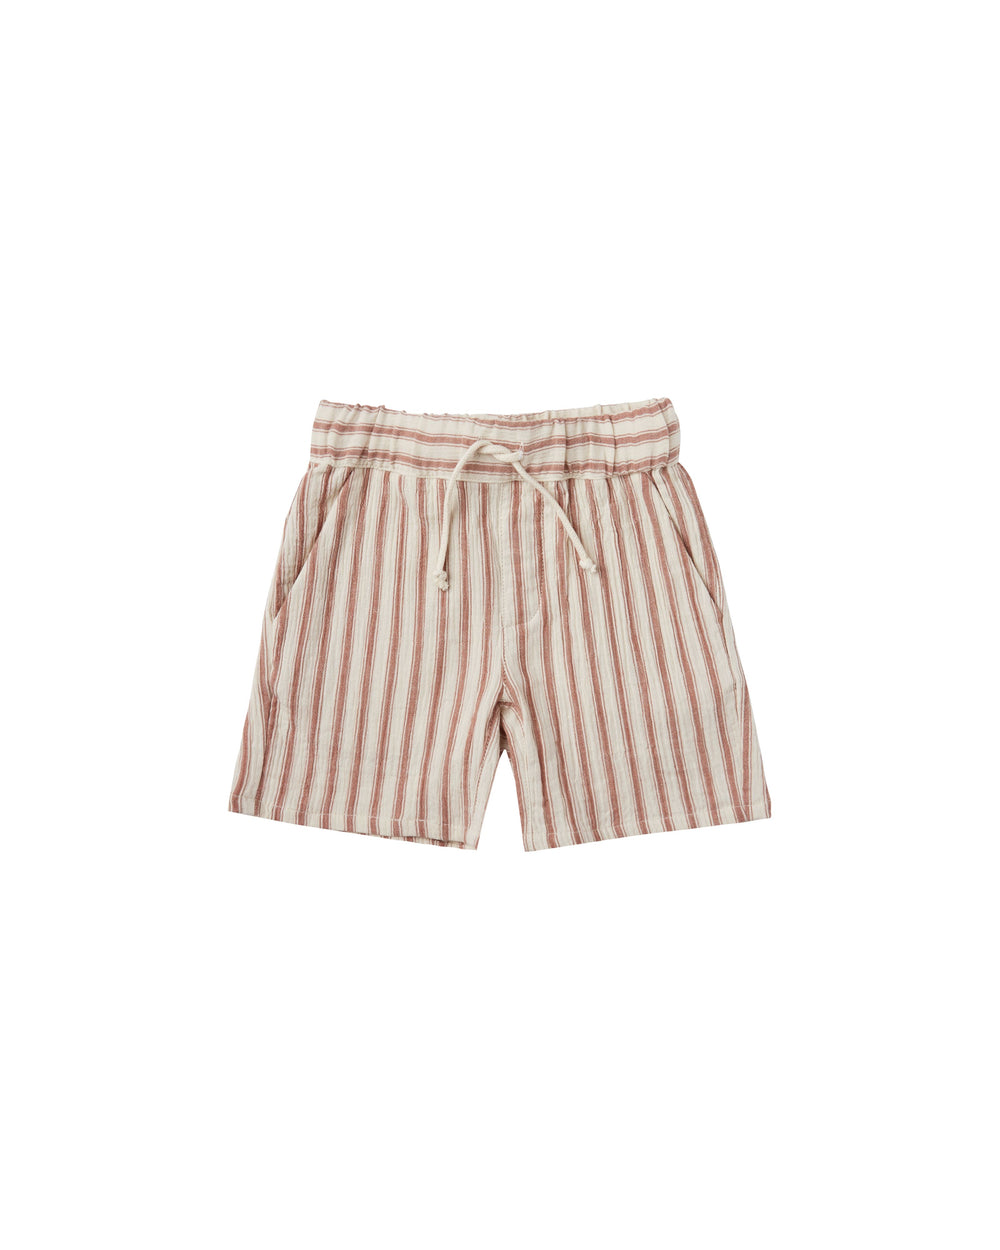 Striped bermuda shorts || Amber